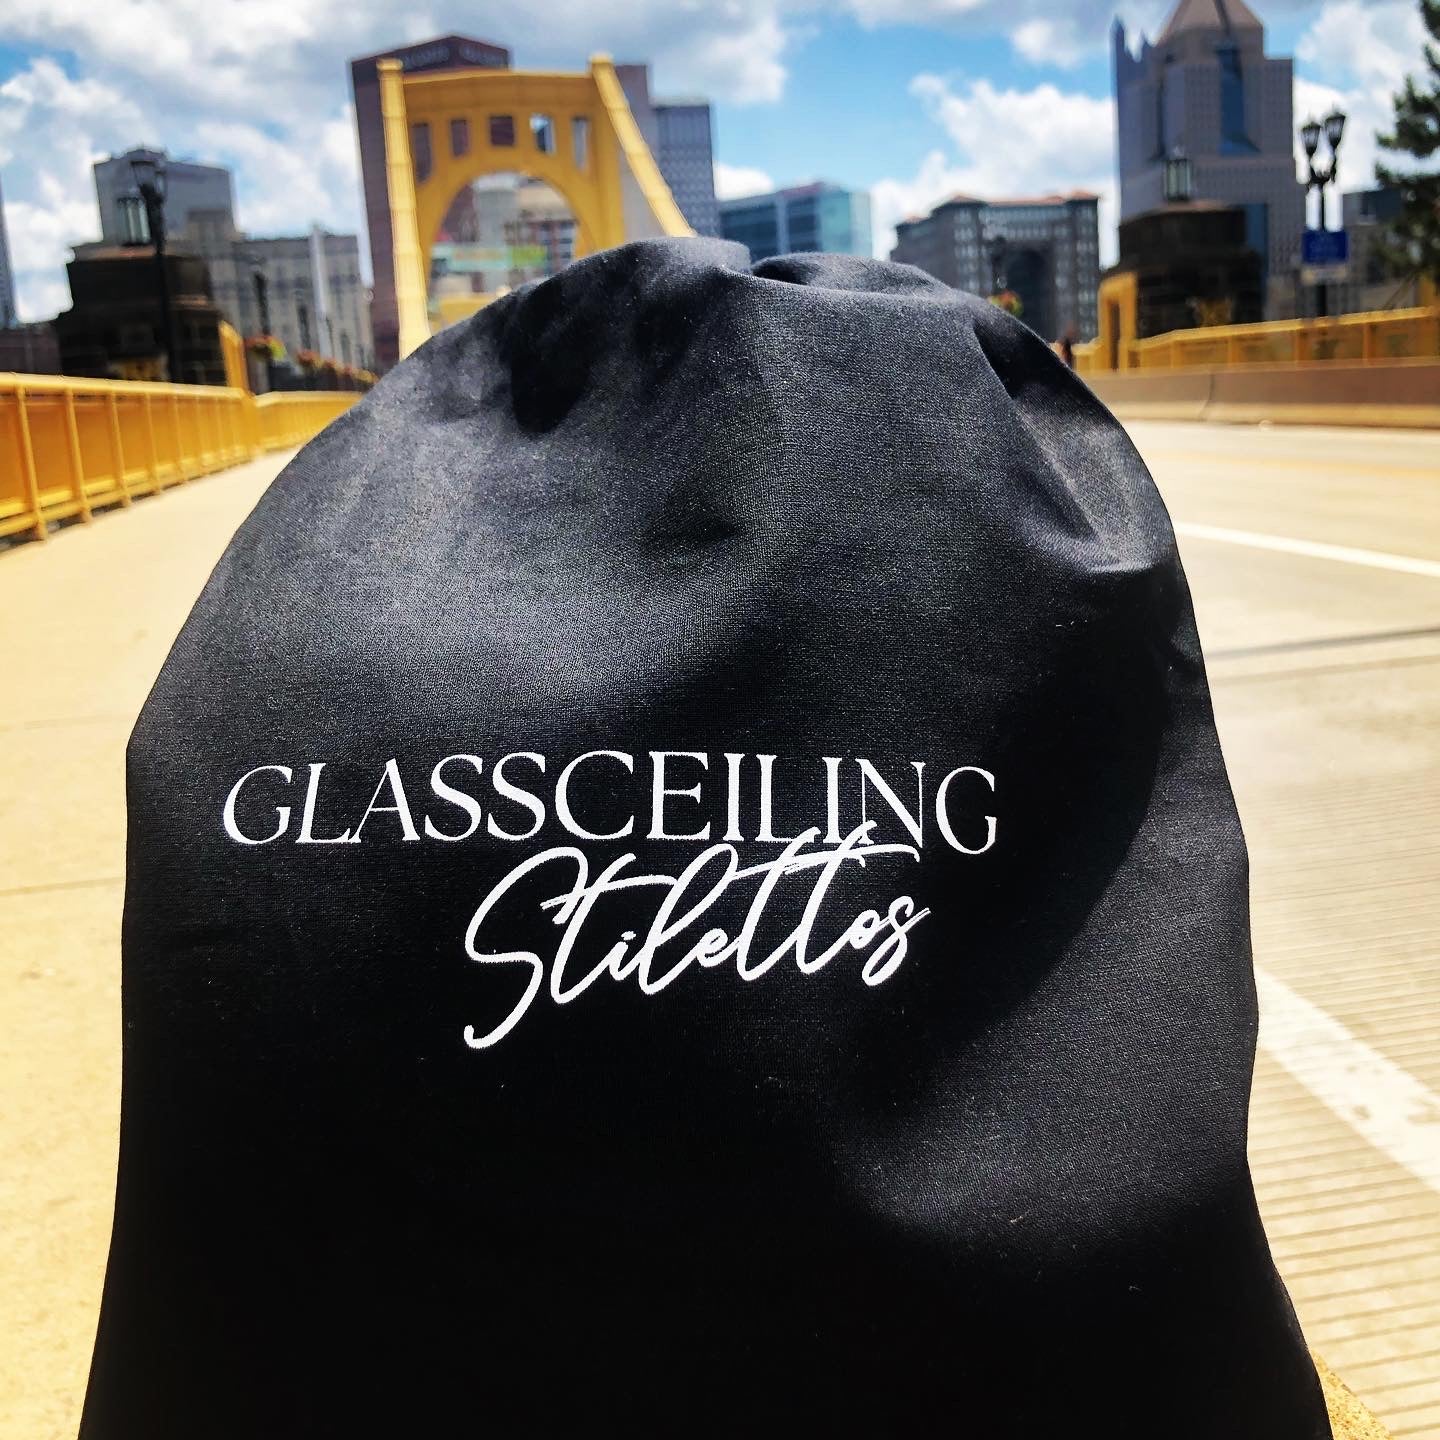 Photo: GlassCeiling Stilettos shoe bag on Warhol Bridge Pittsburgh, PA